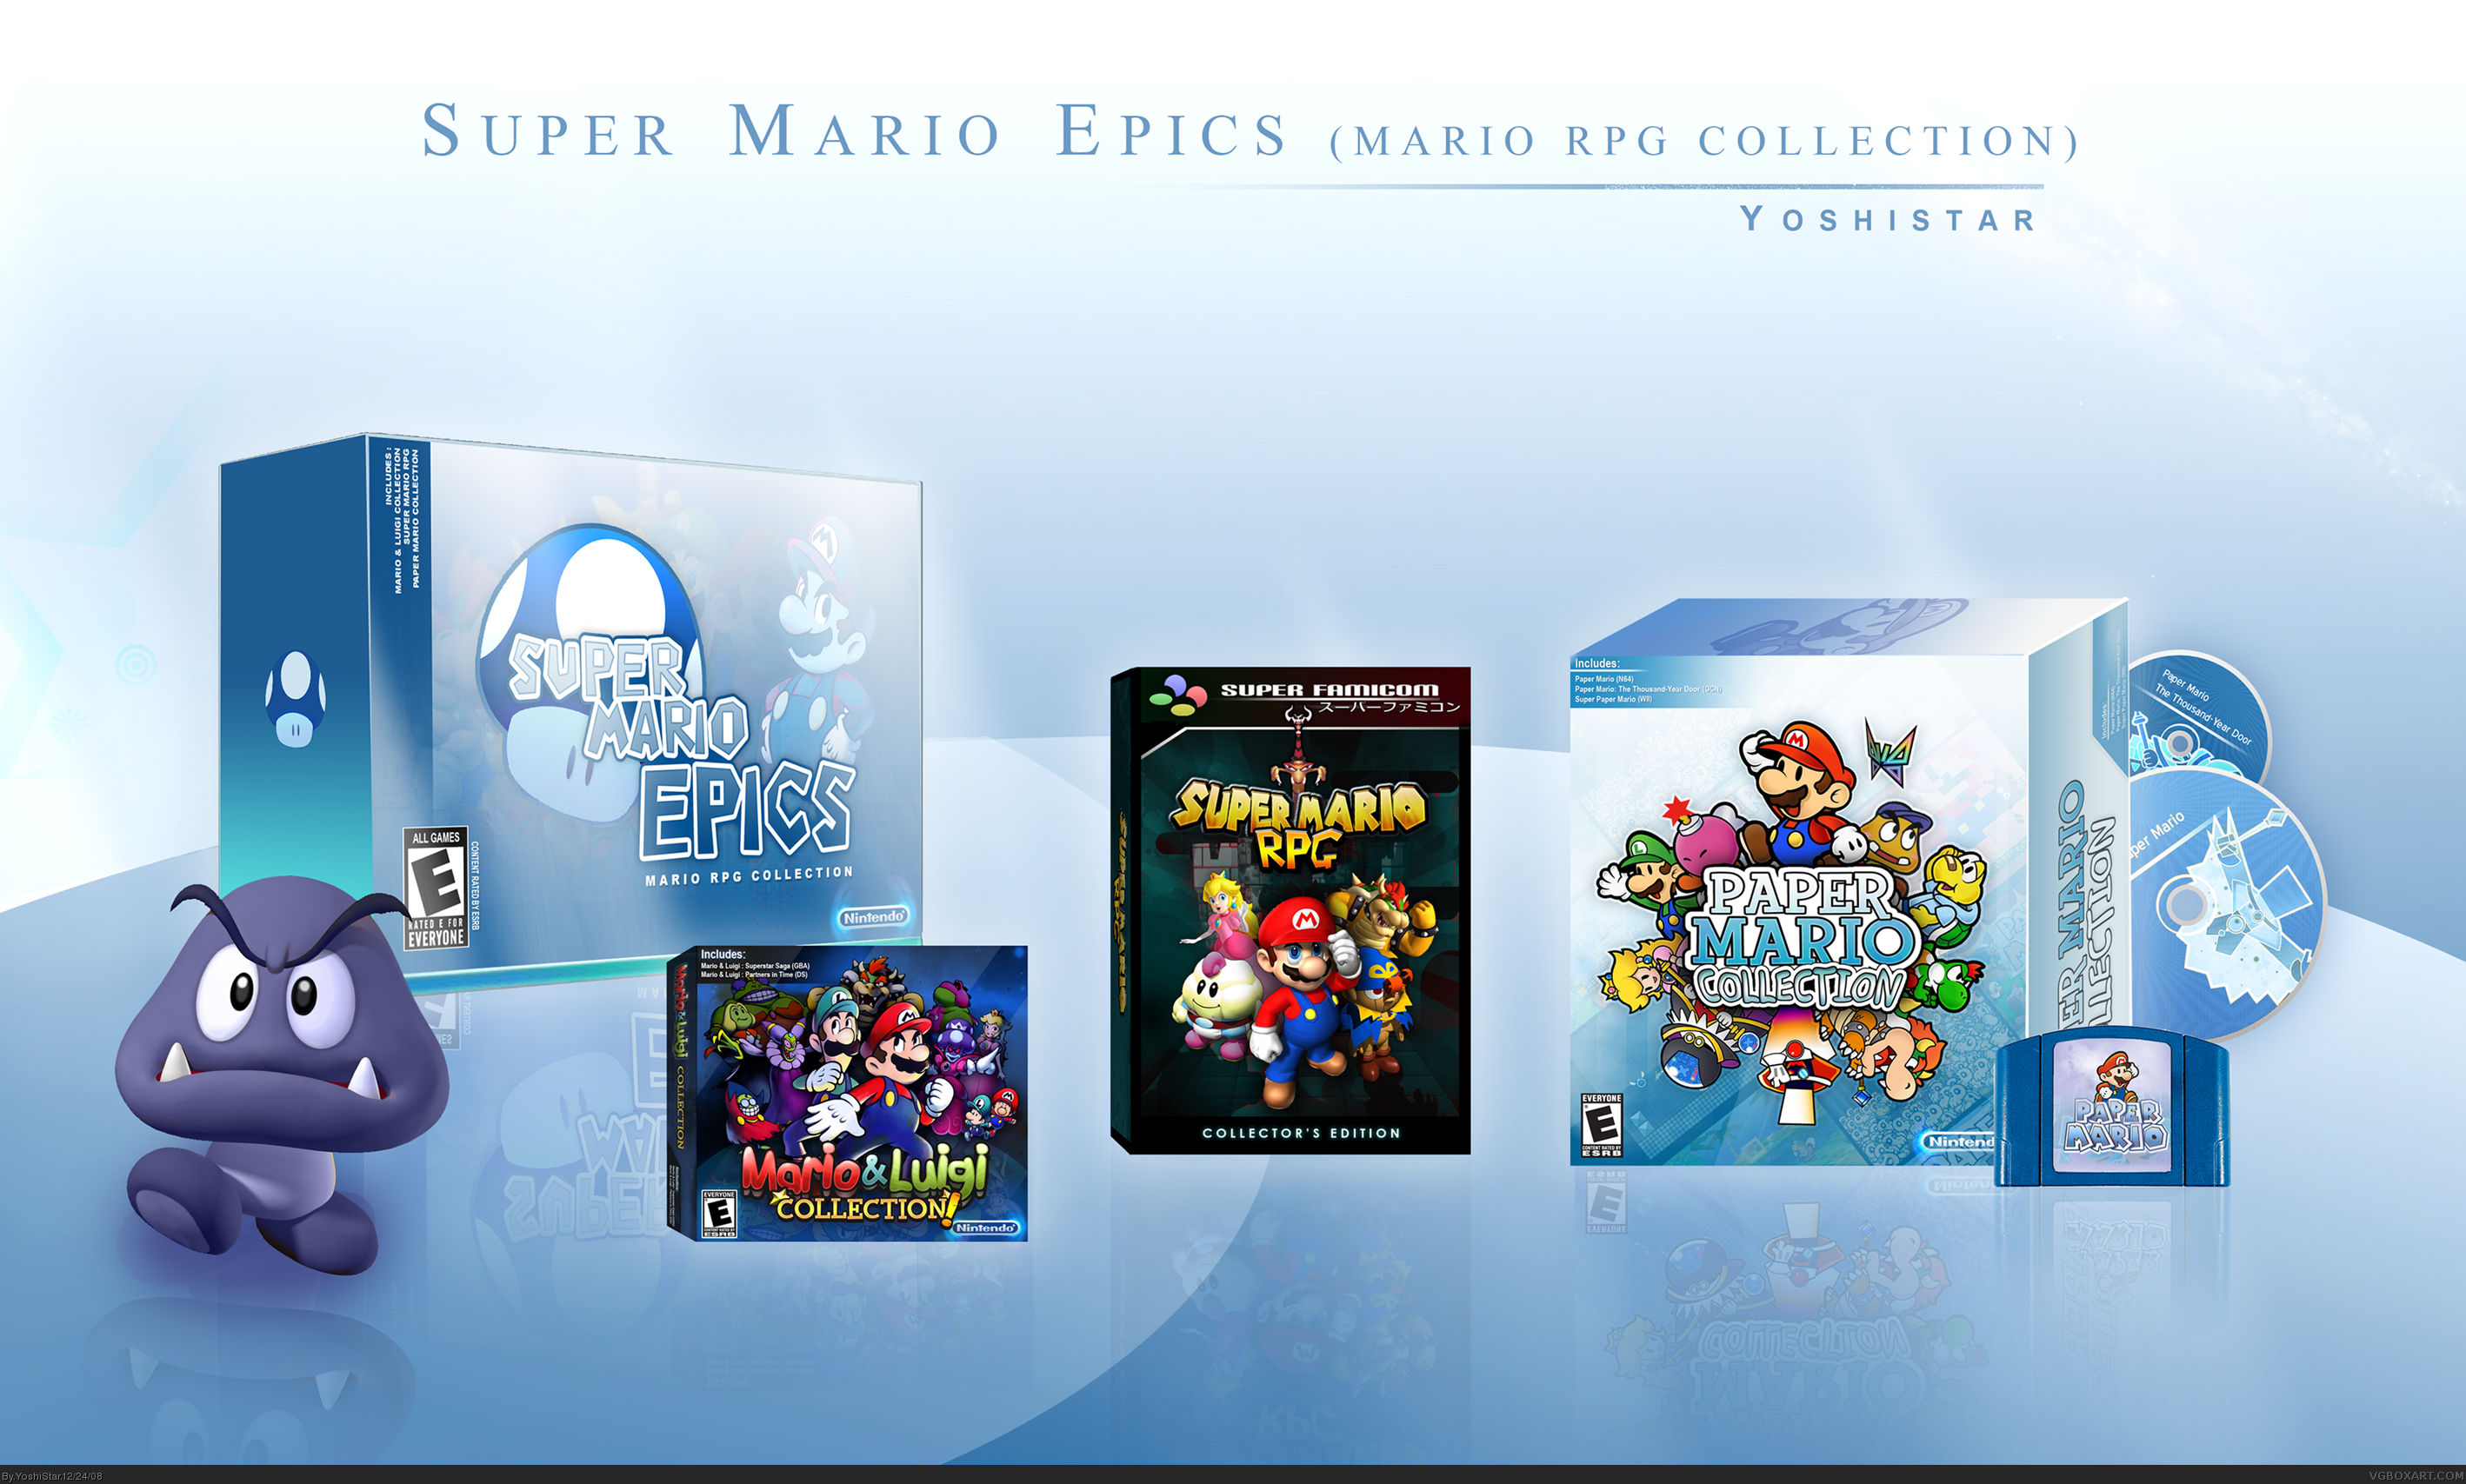 Super Mario Epics box cover